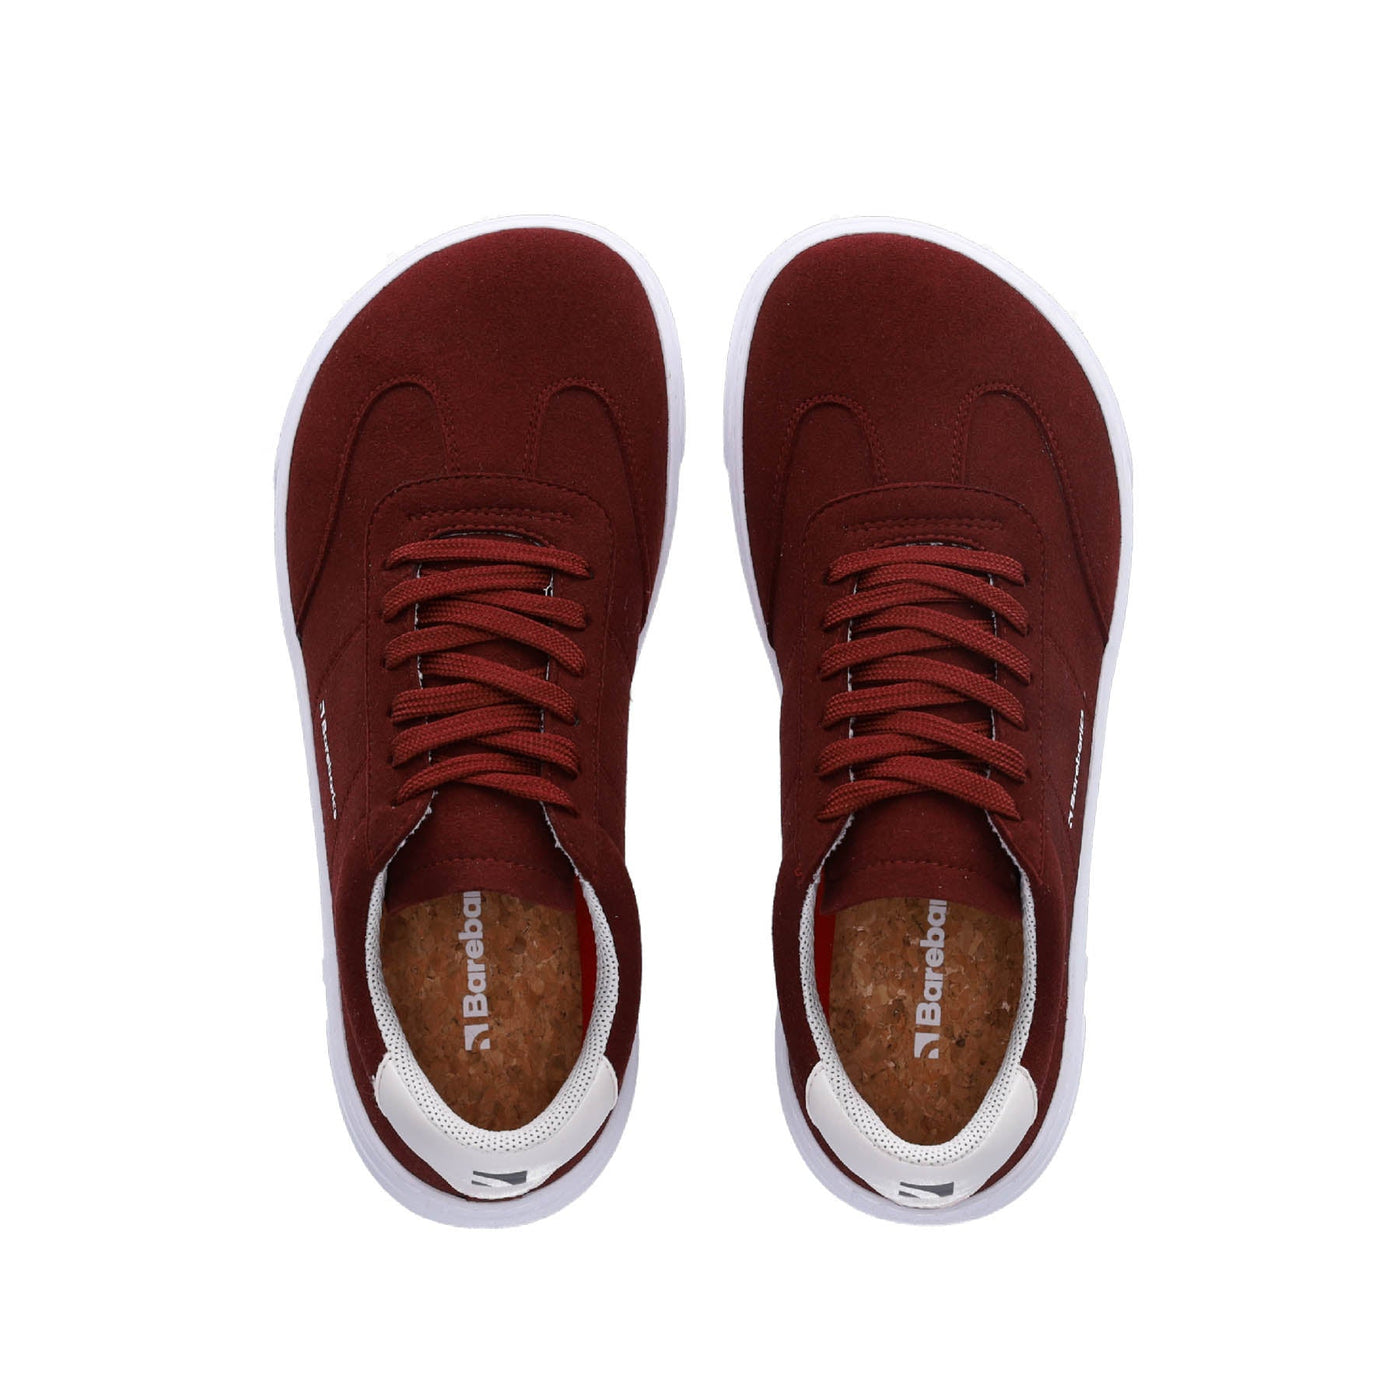 Barebarics Pulsar Sneaker - Maroon & White 39 - Like New